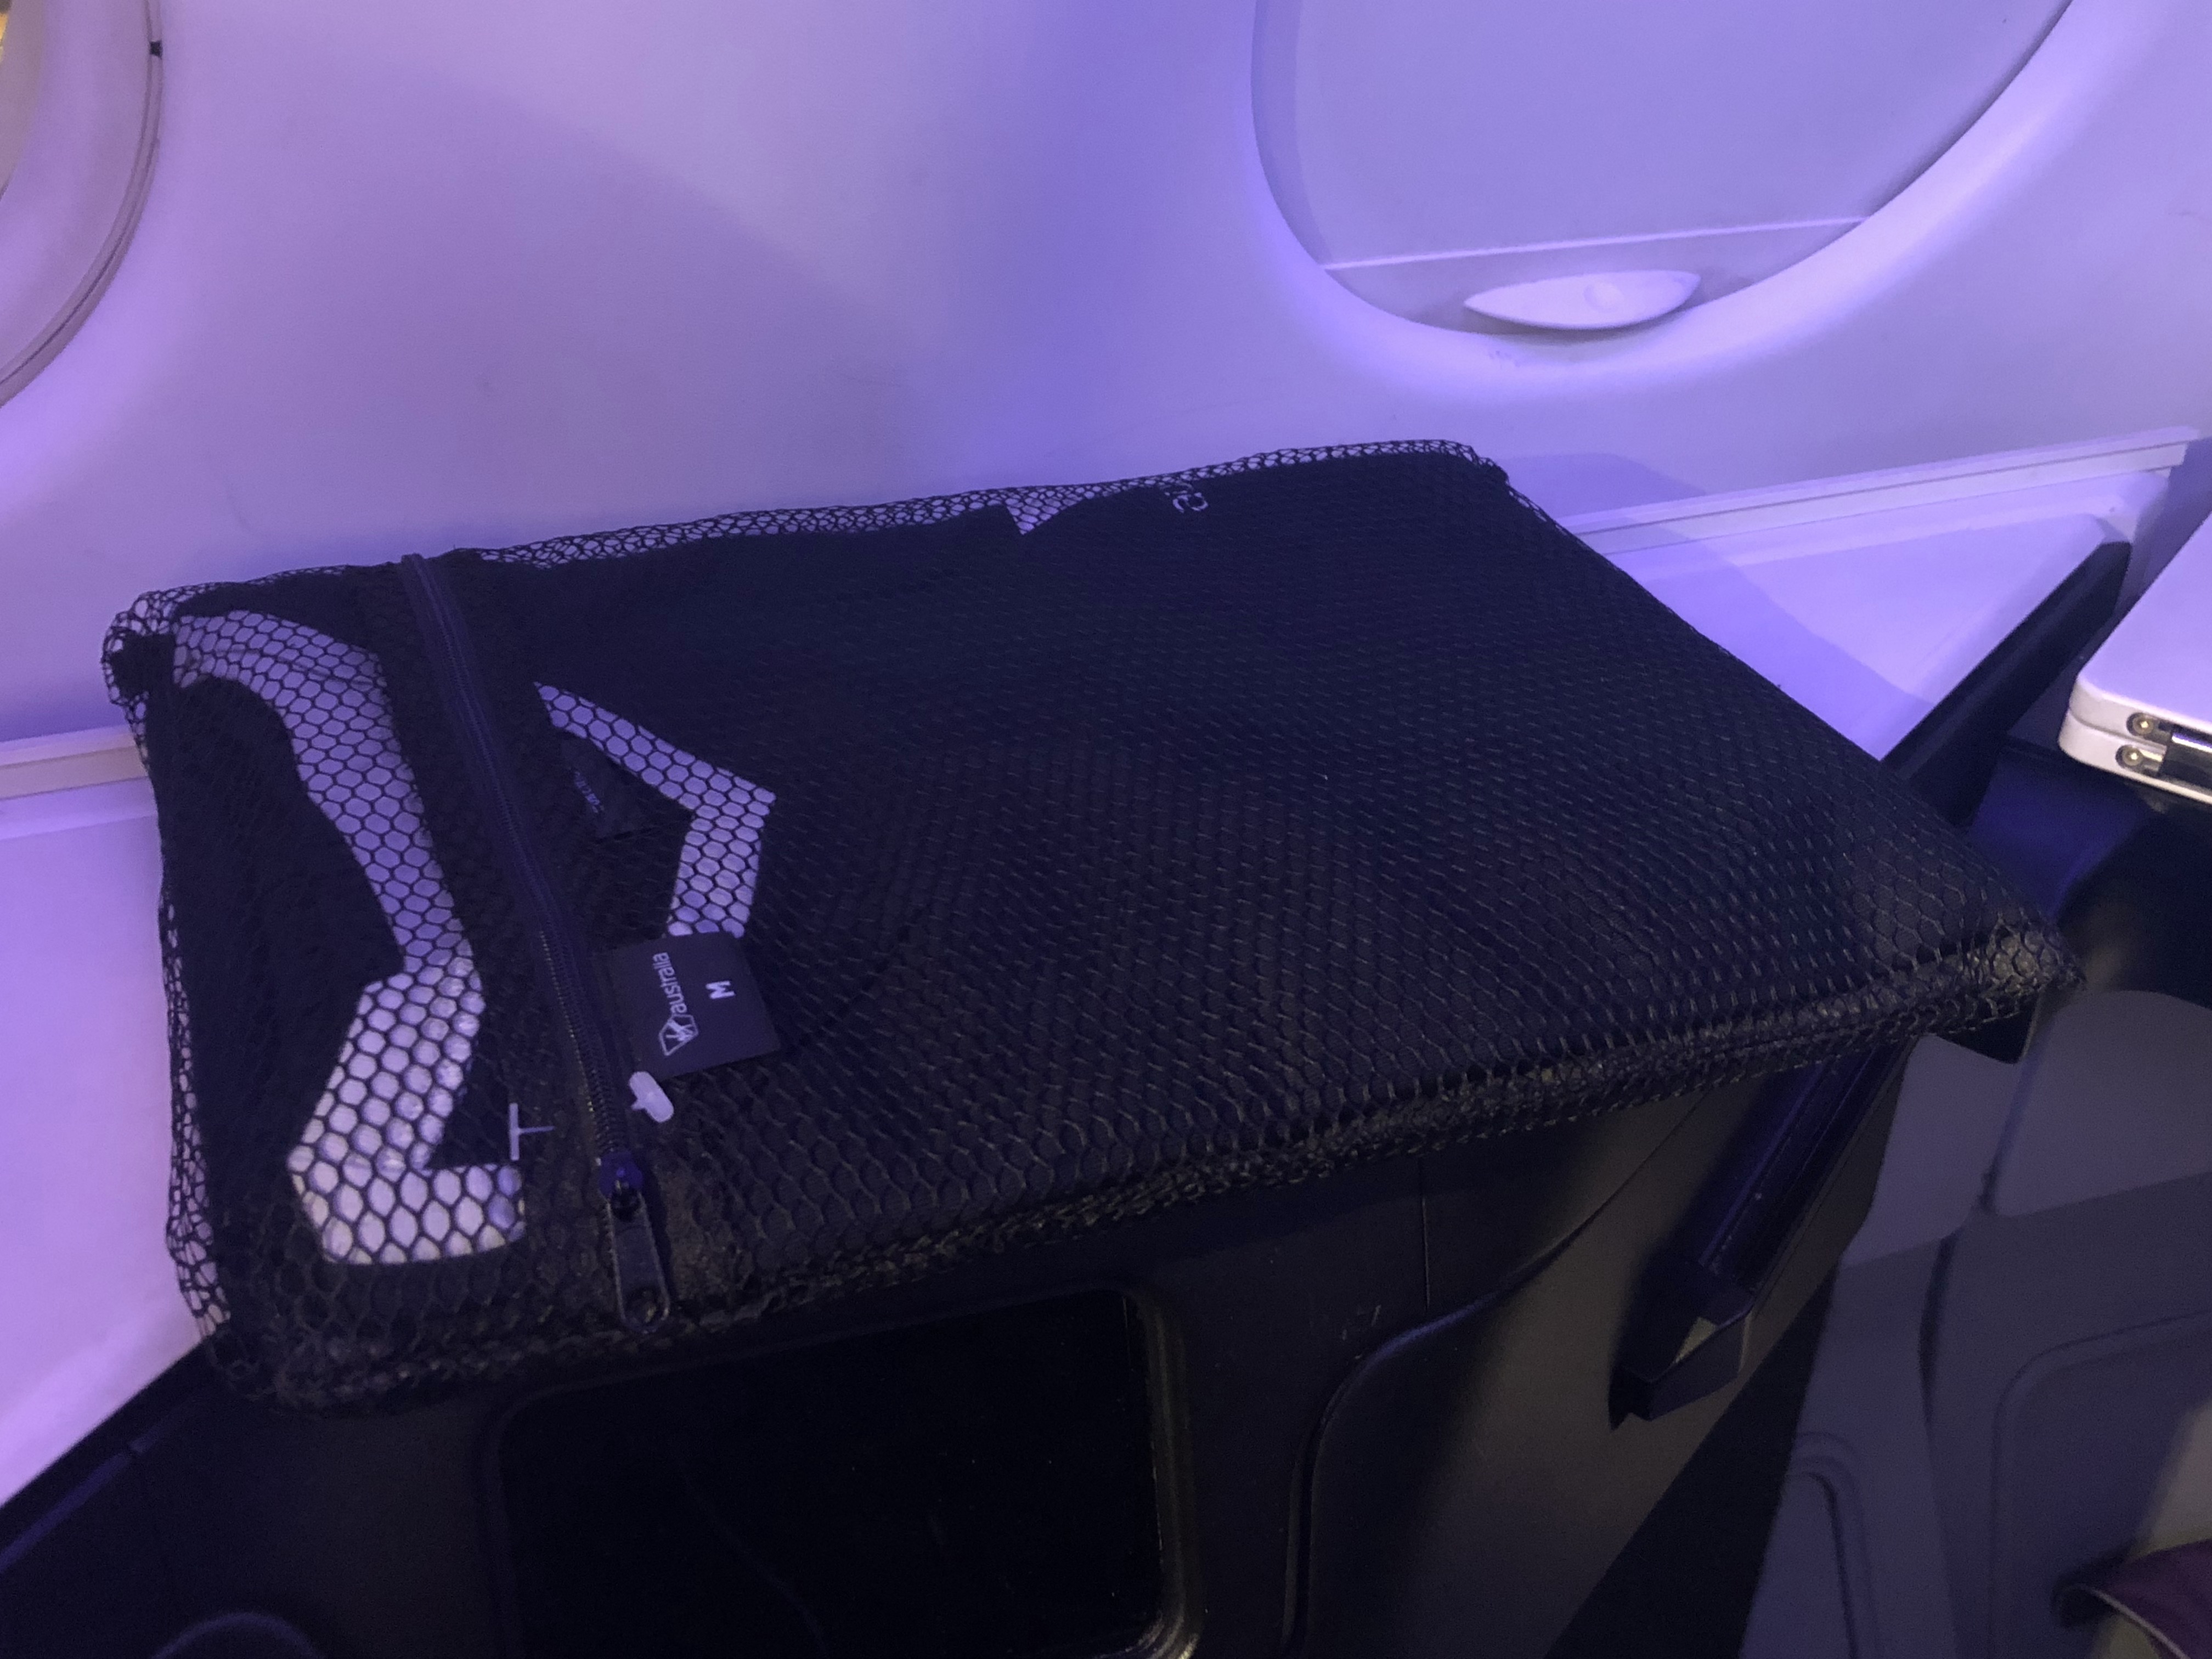 a black bag on a plane